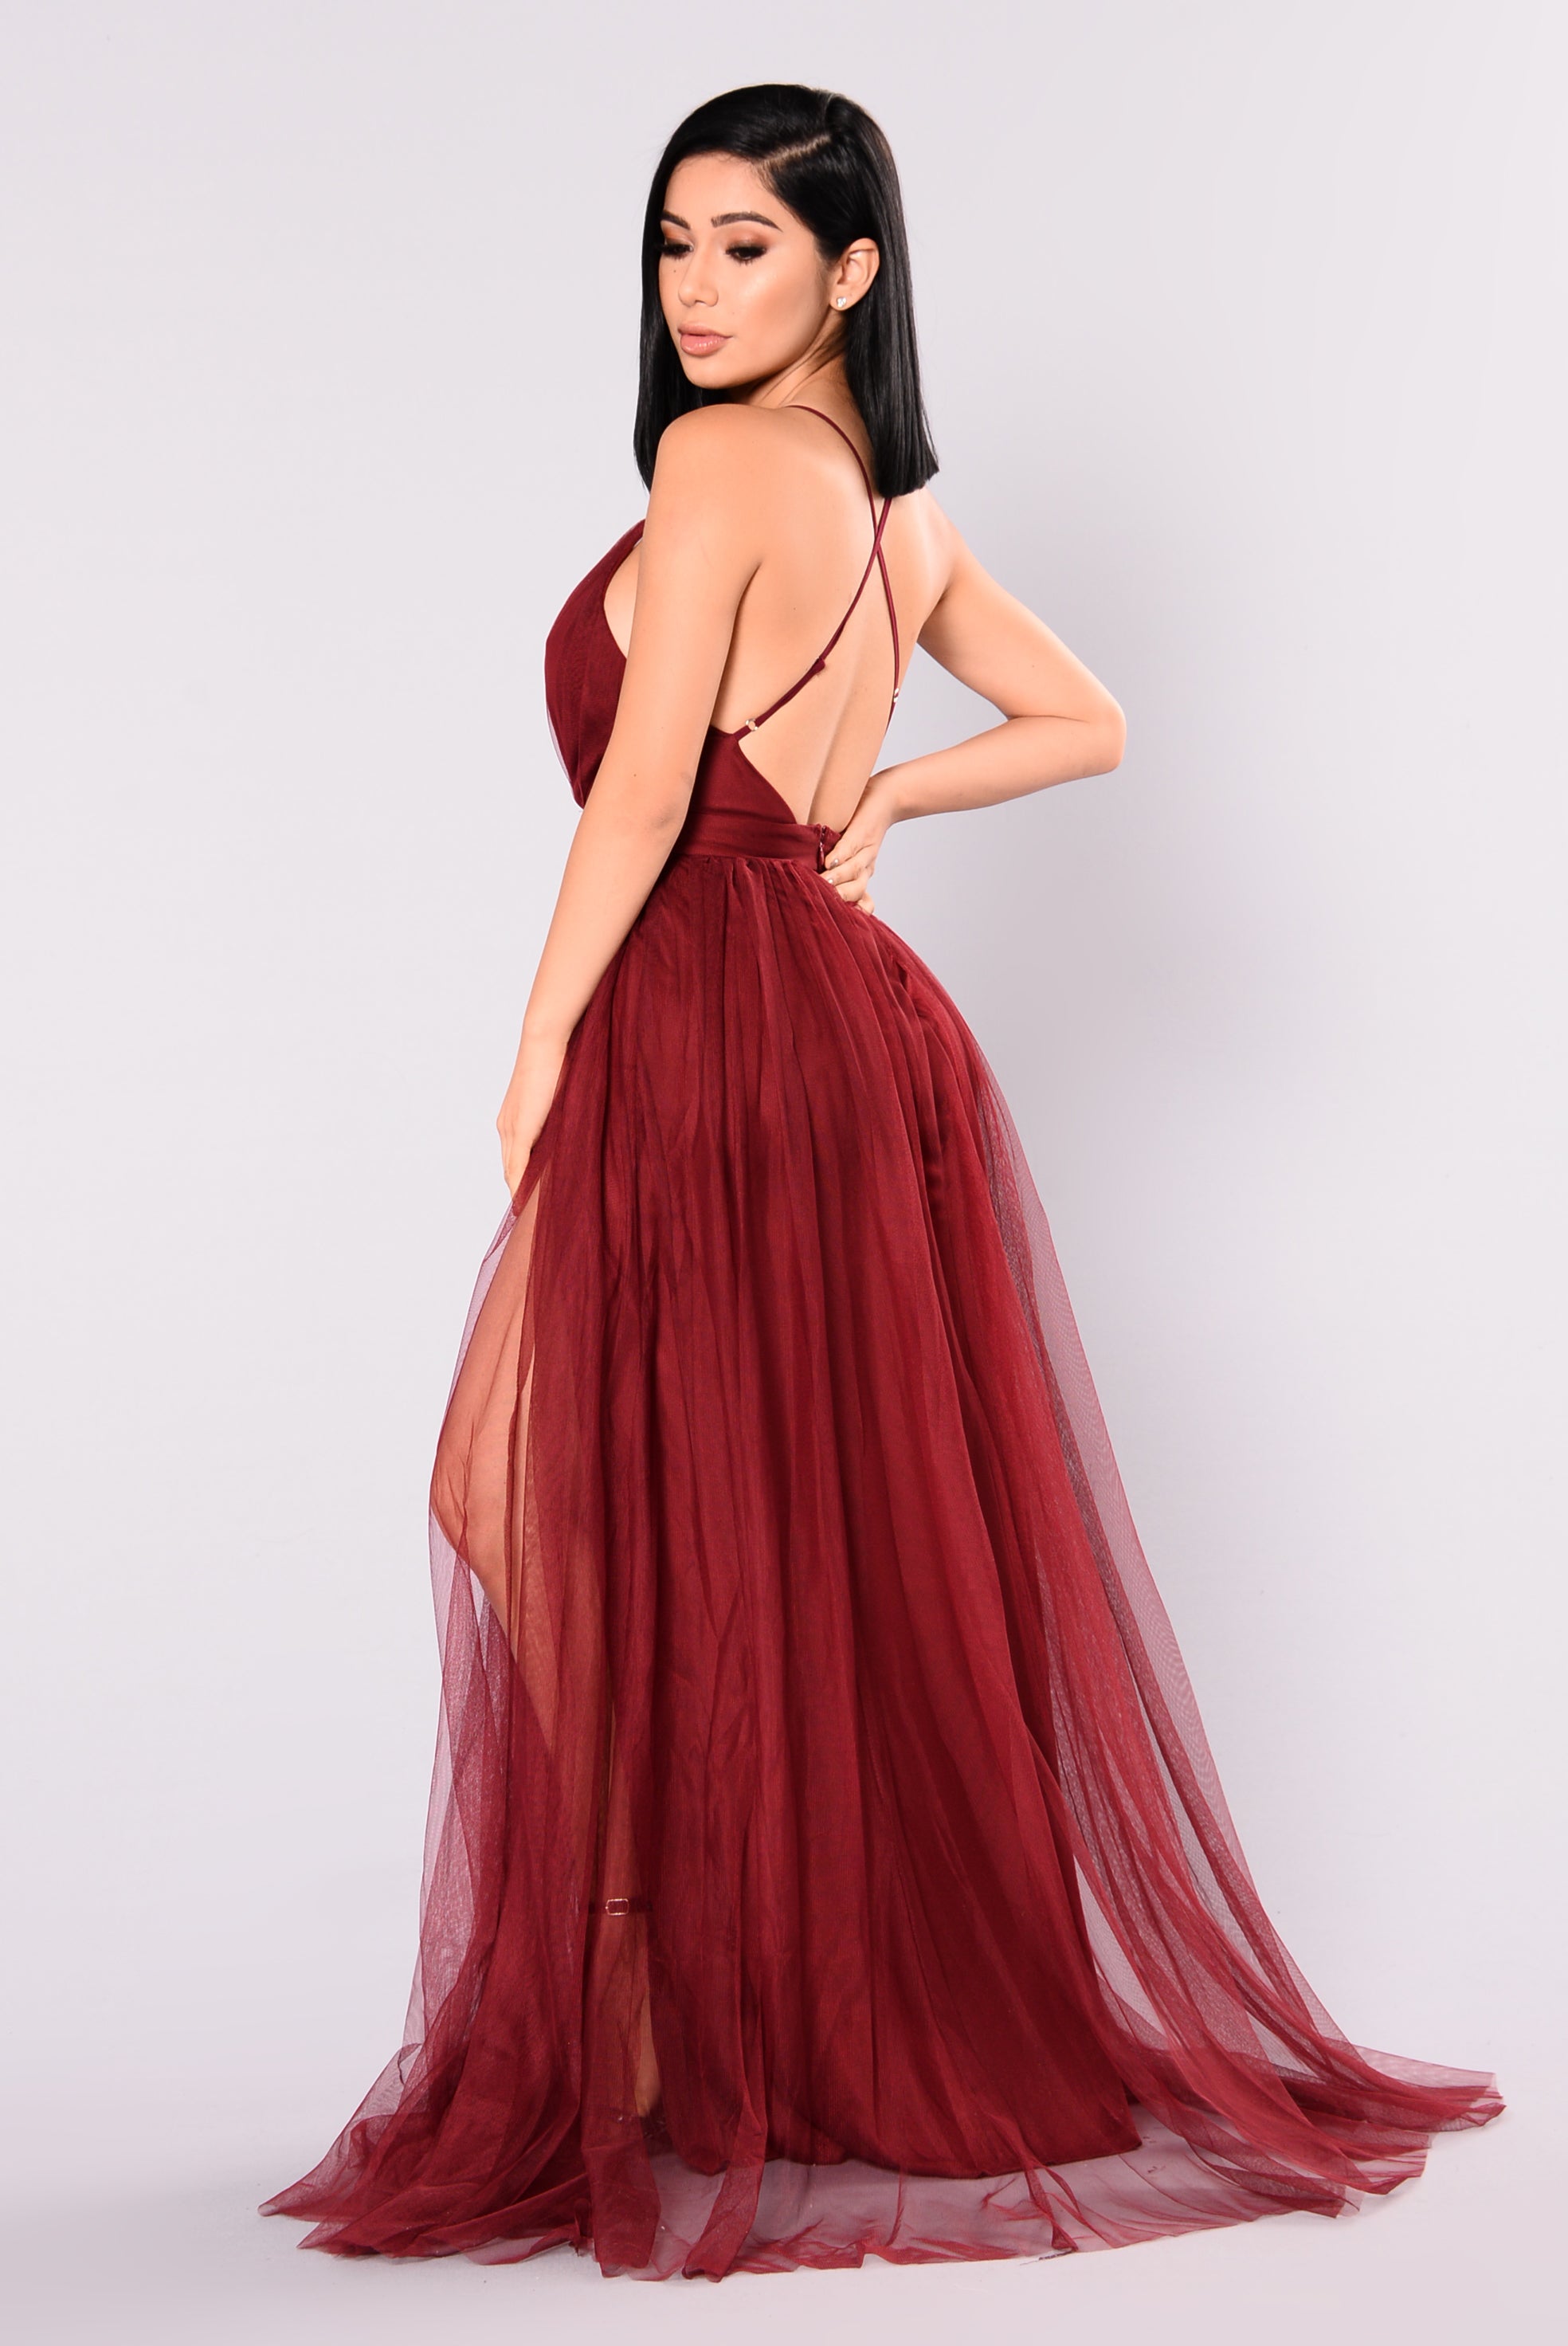 fashion nova red long dress